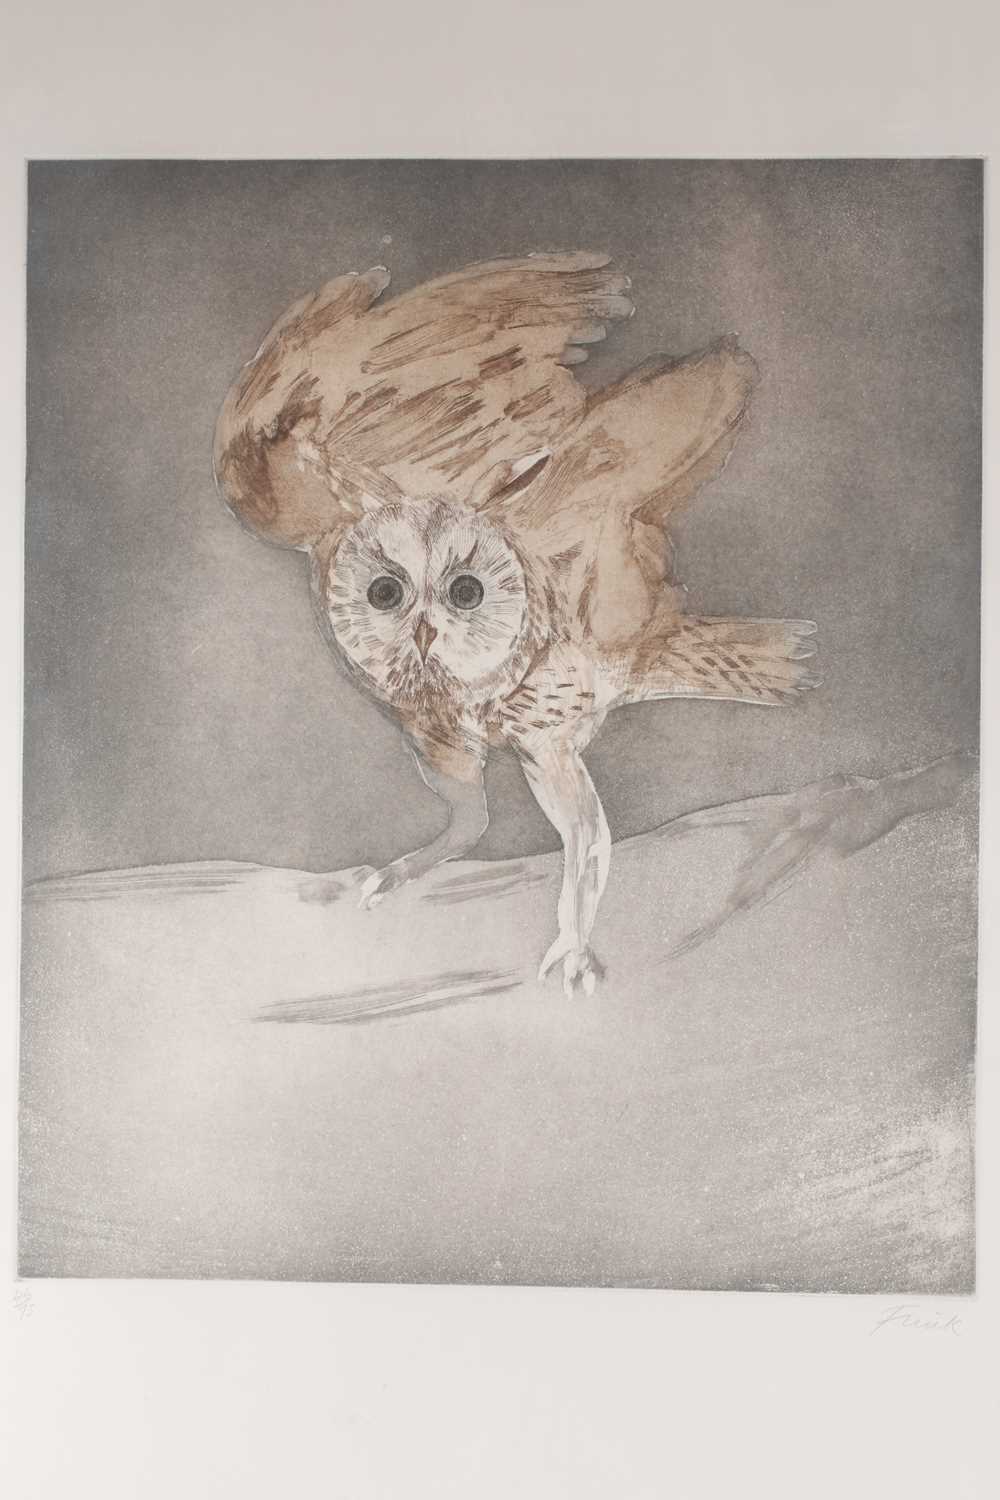 Dame Elizabeth Frink 1930-1933 British Long-Eared Owl from Six Owl Series